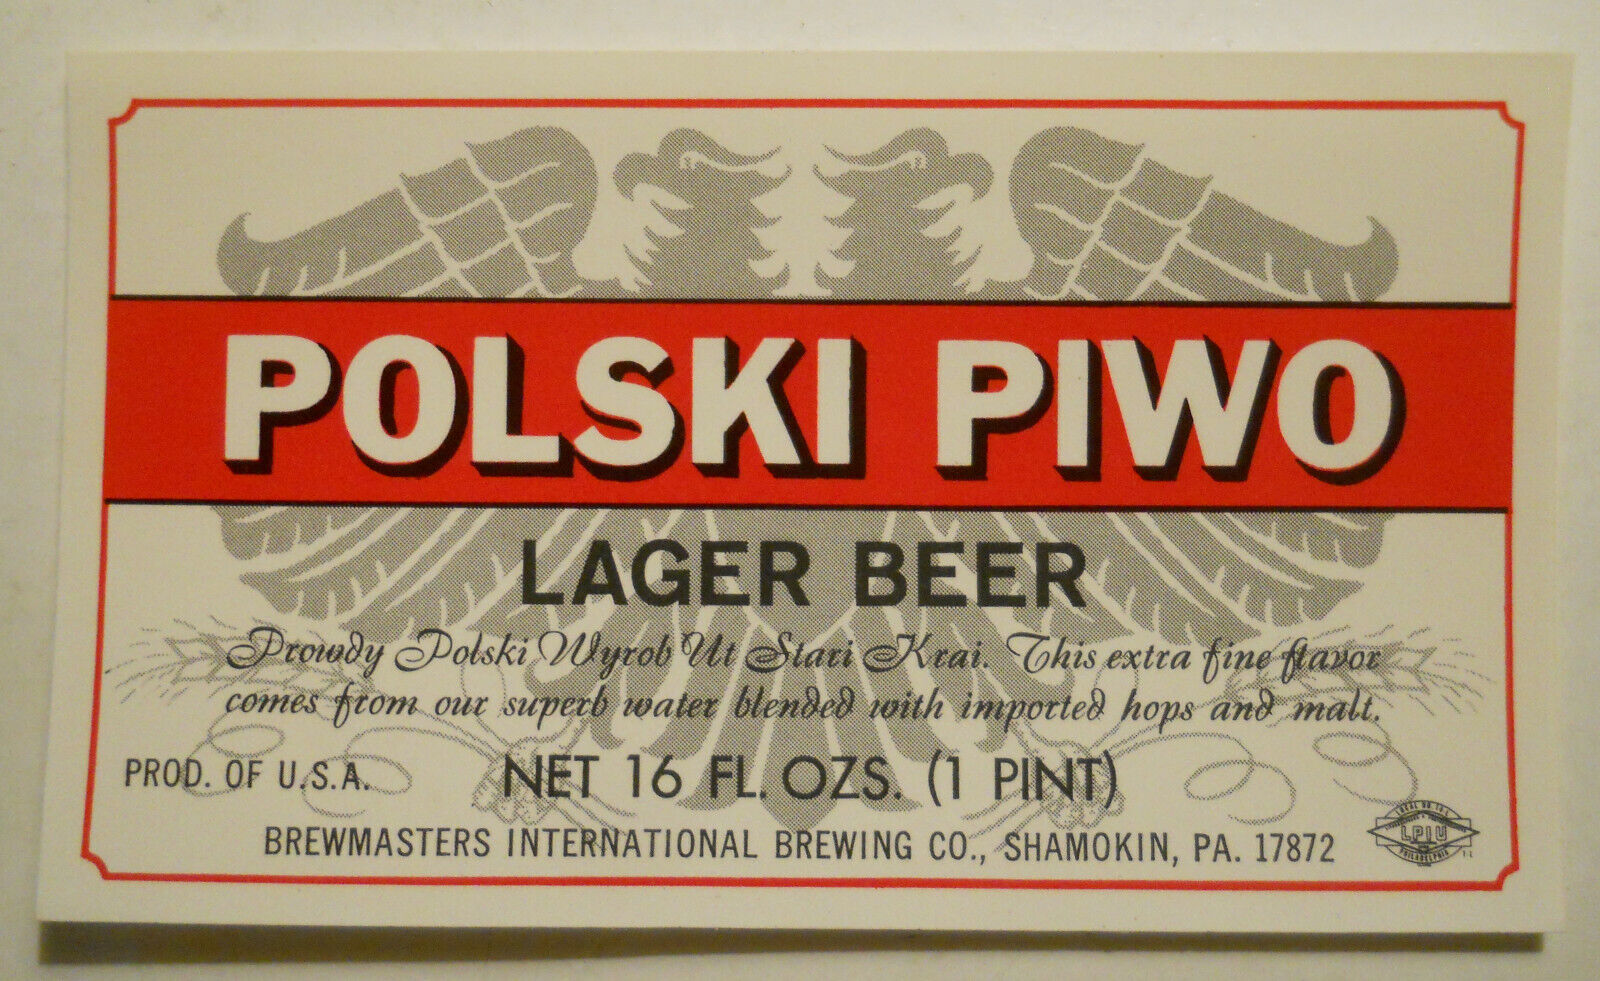 VIntage Polski Piwo Lager Beer (Shamokin, Pennsylvania) Beer Bottle Label